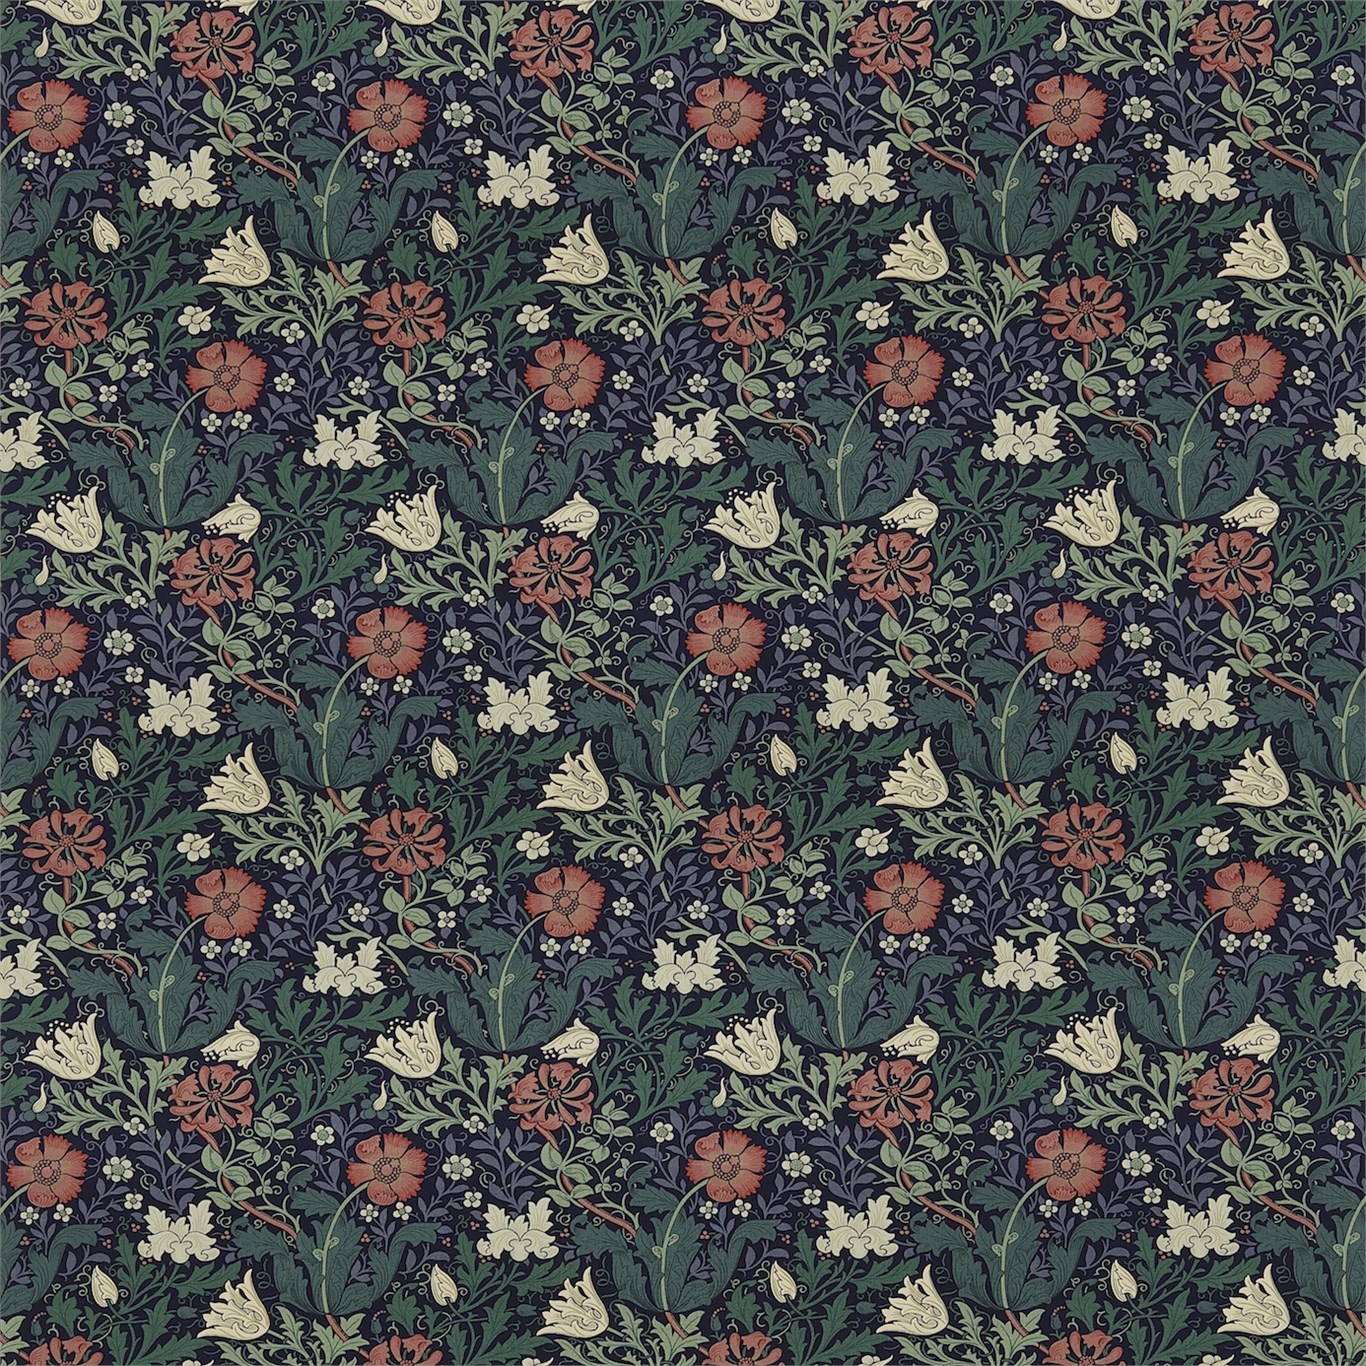 fabric wallpaper uk,military camouflage,pattern,uniform,green,textile